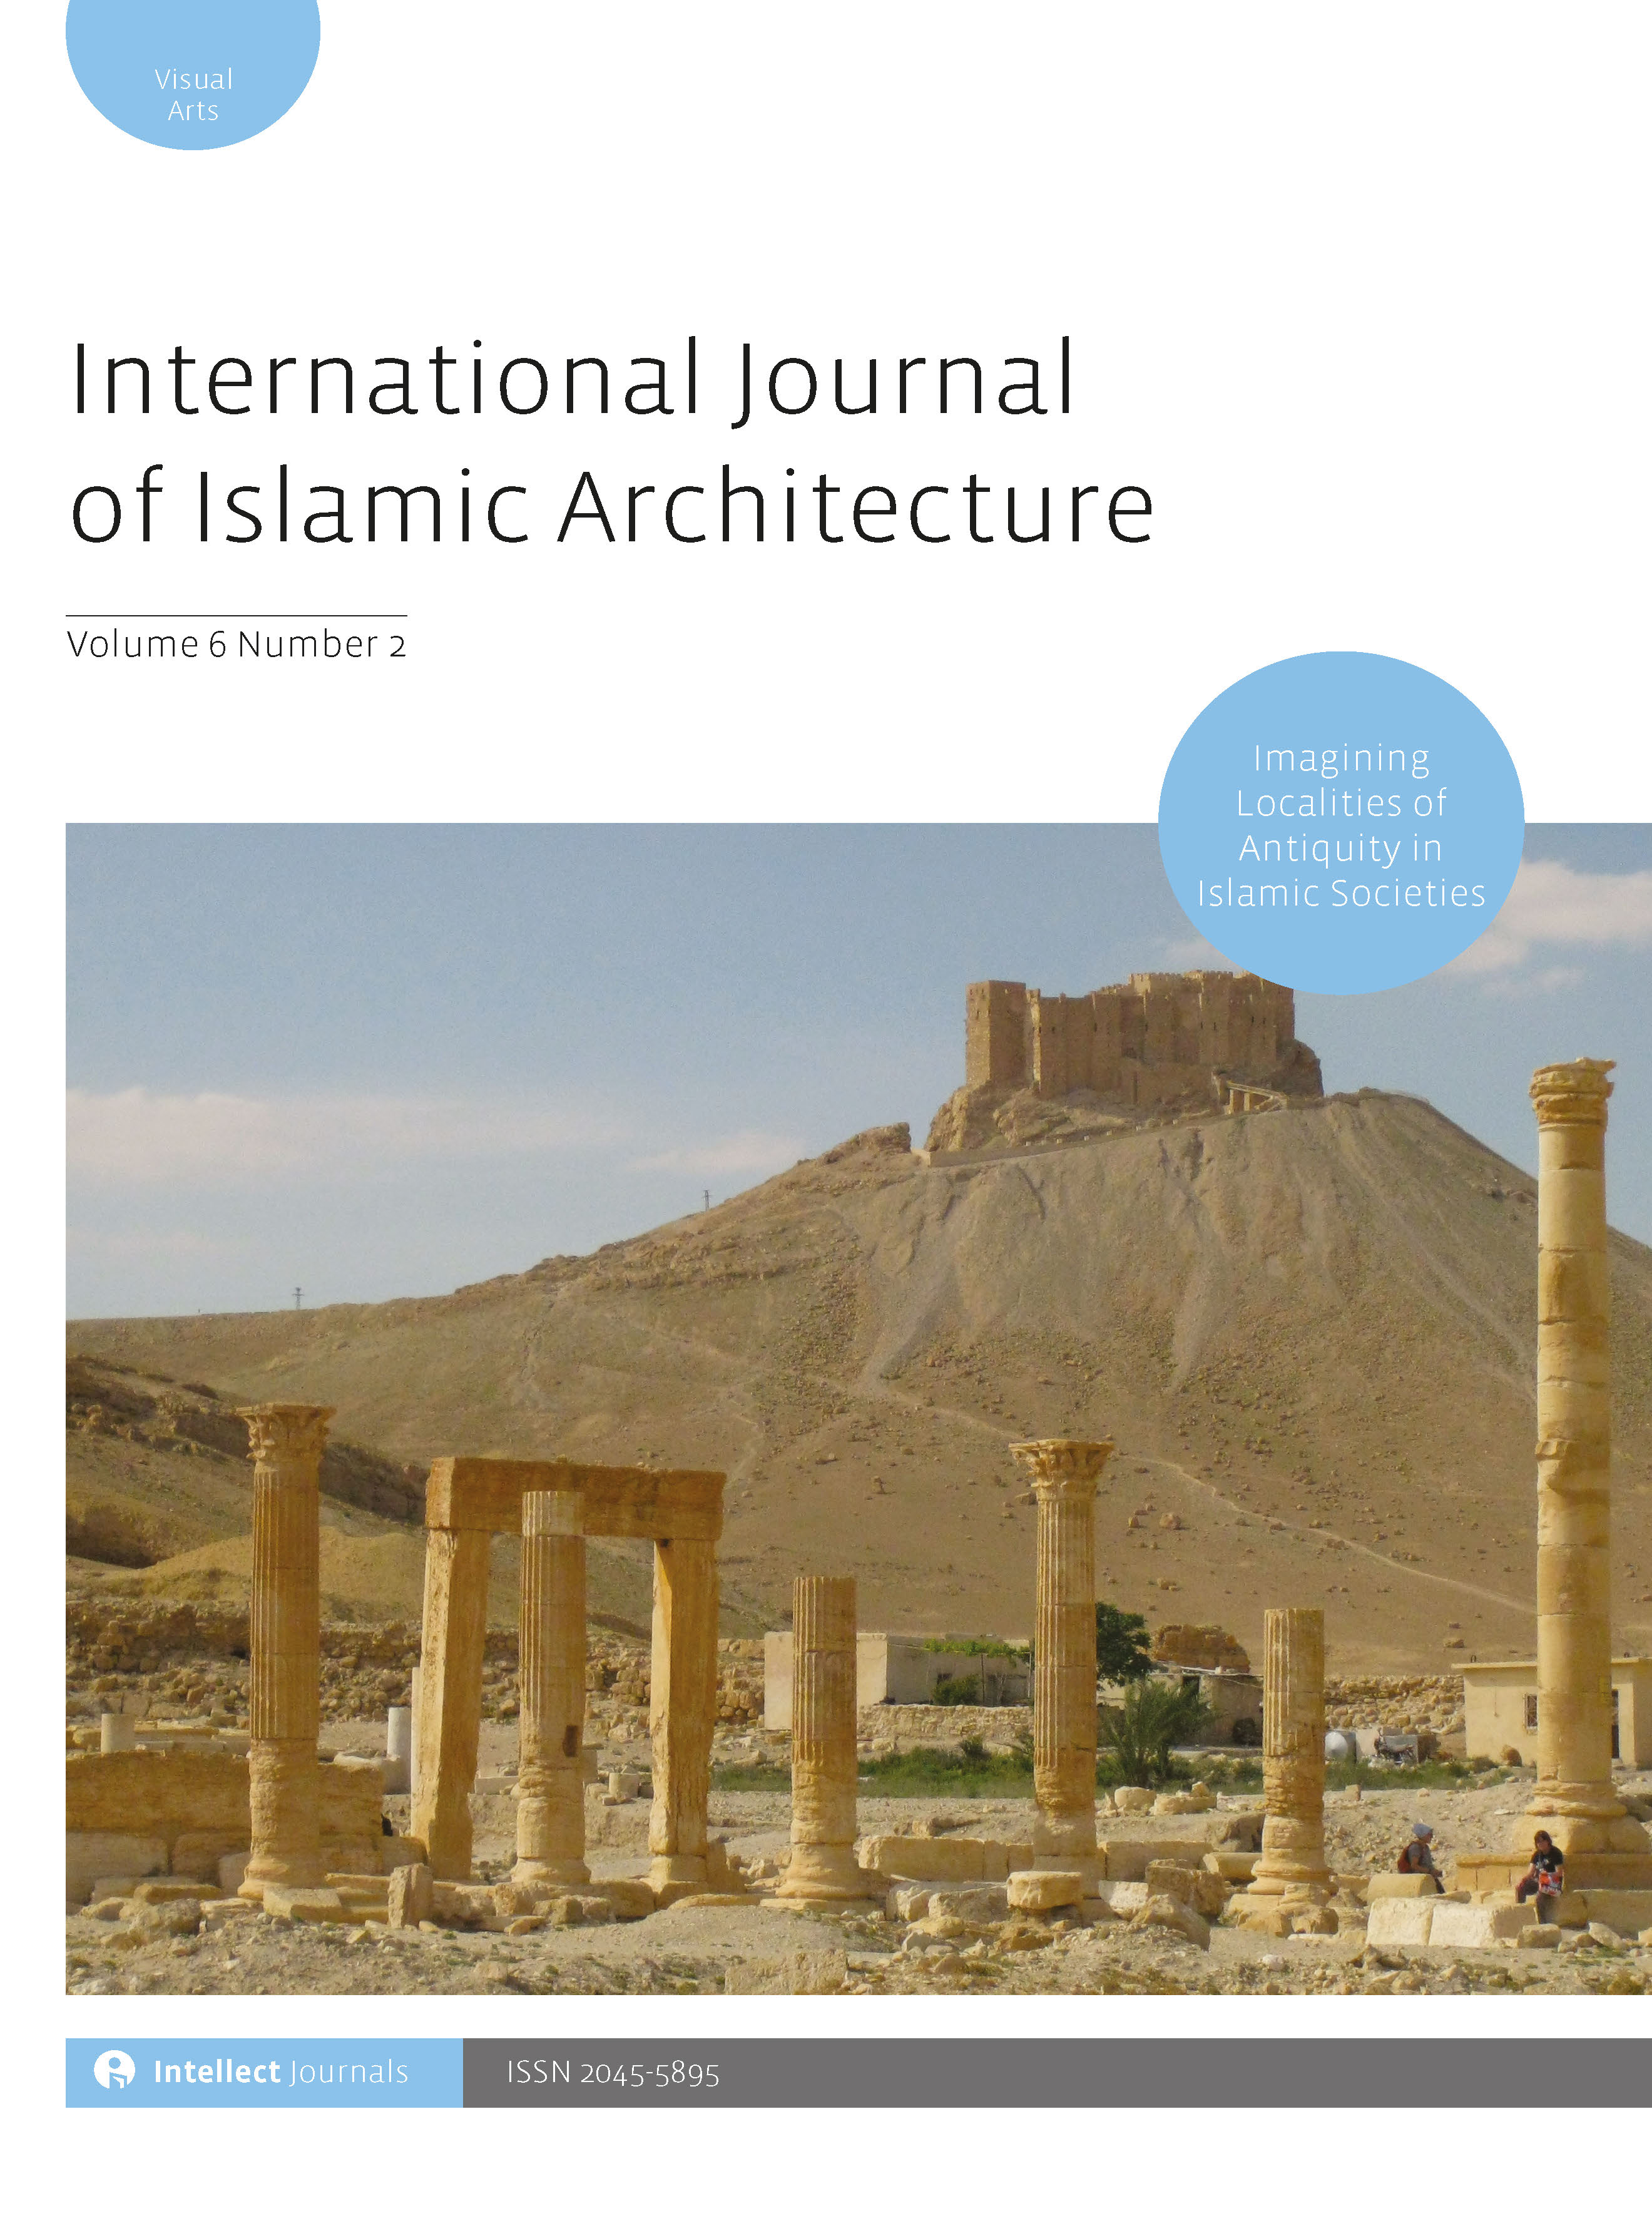 Imagining Localities of Antiquity in Islamic Societies